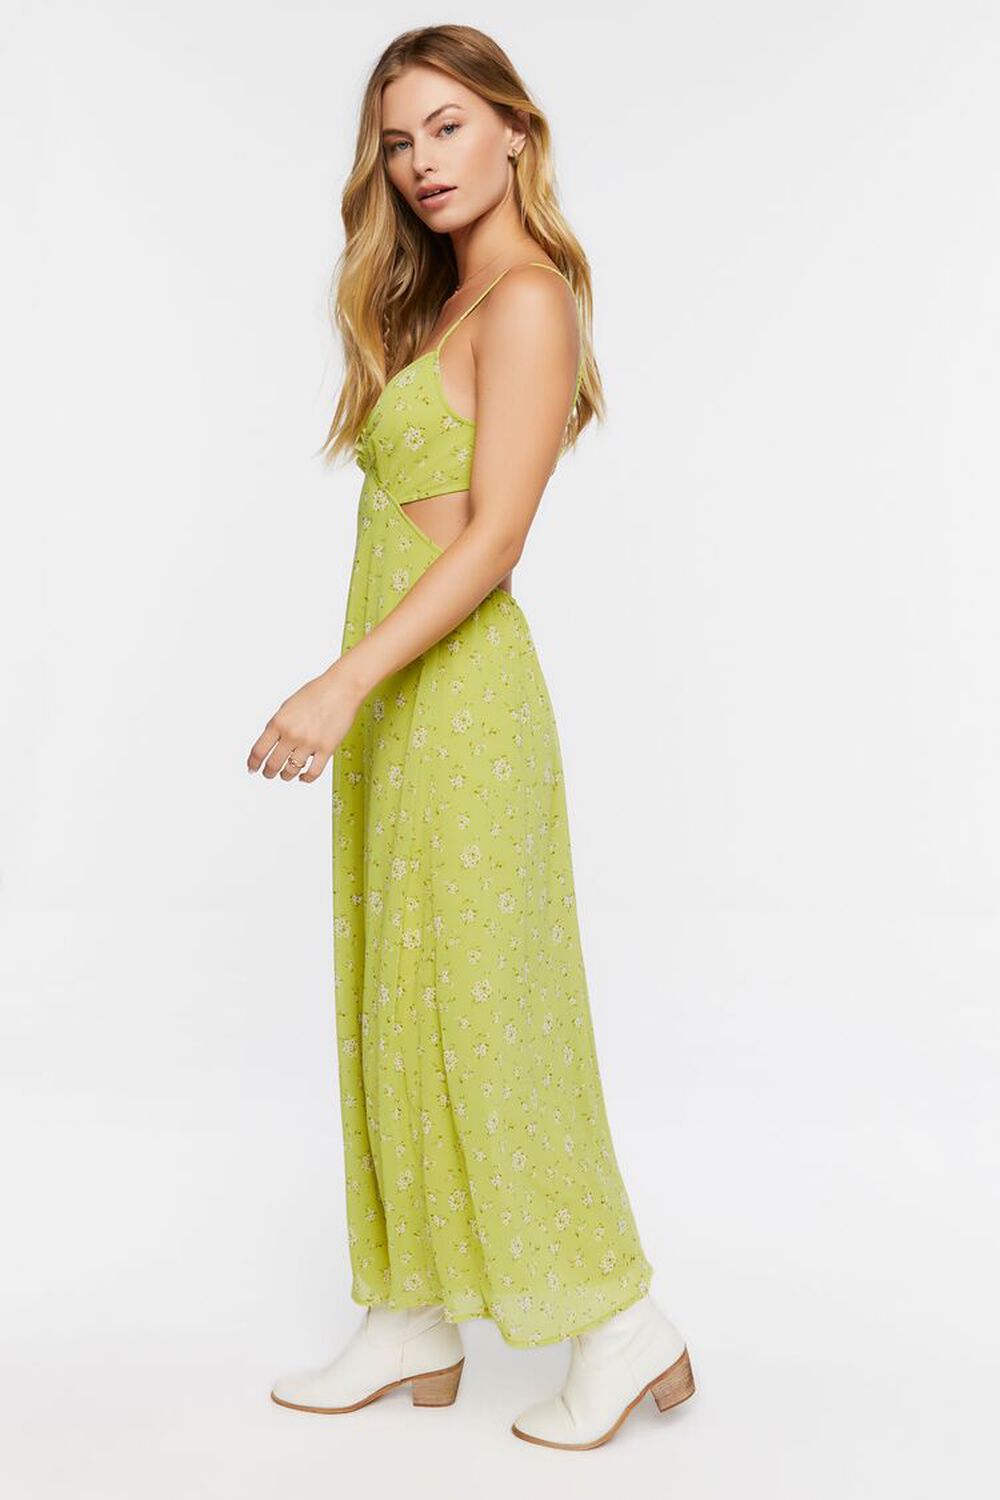 GREEN/MULTI Chiffon Ditsy Floral Print Maxi Dress, image 2